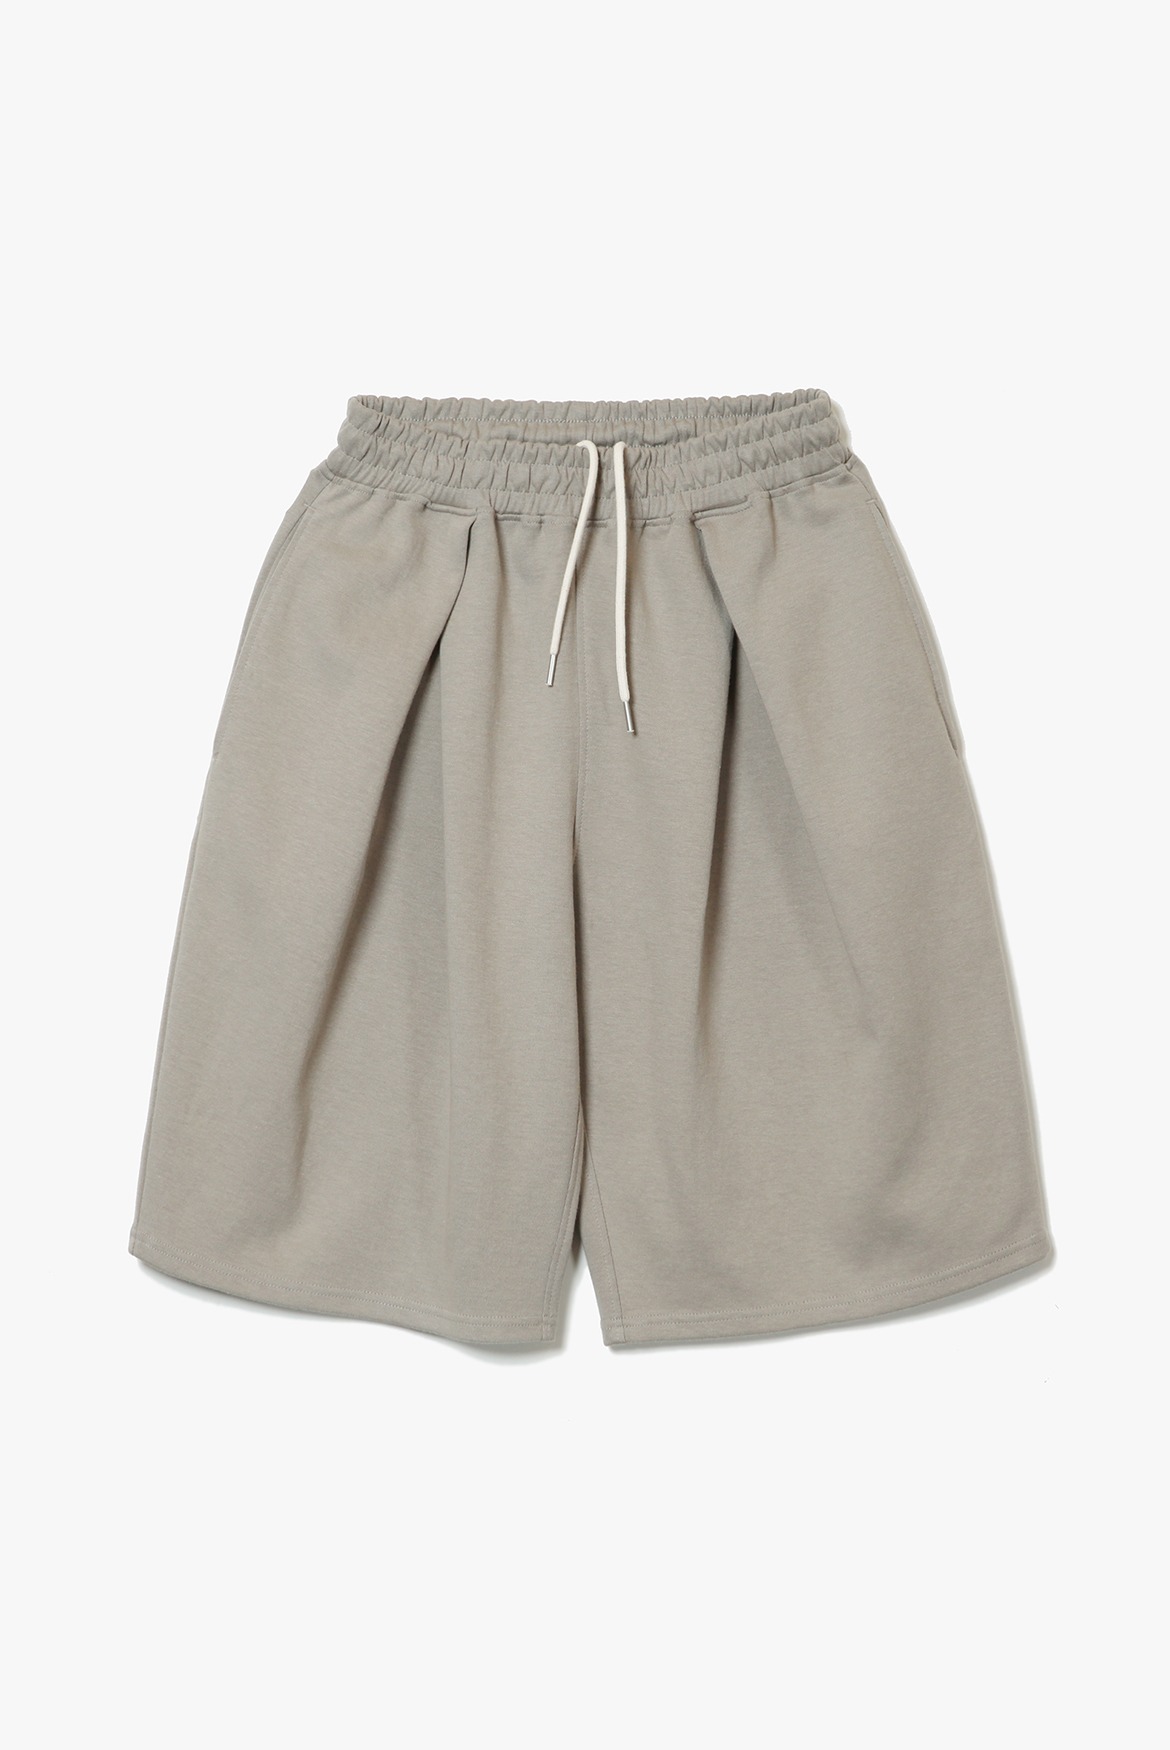 Bermuda Cross Sweat Shorts [Light Khaki]